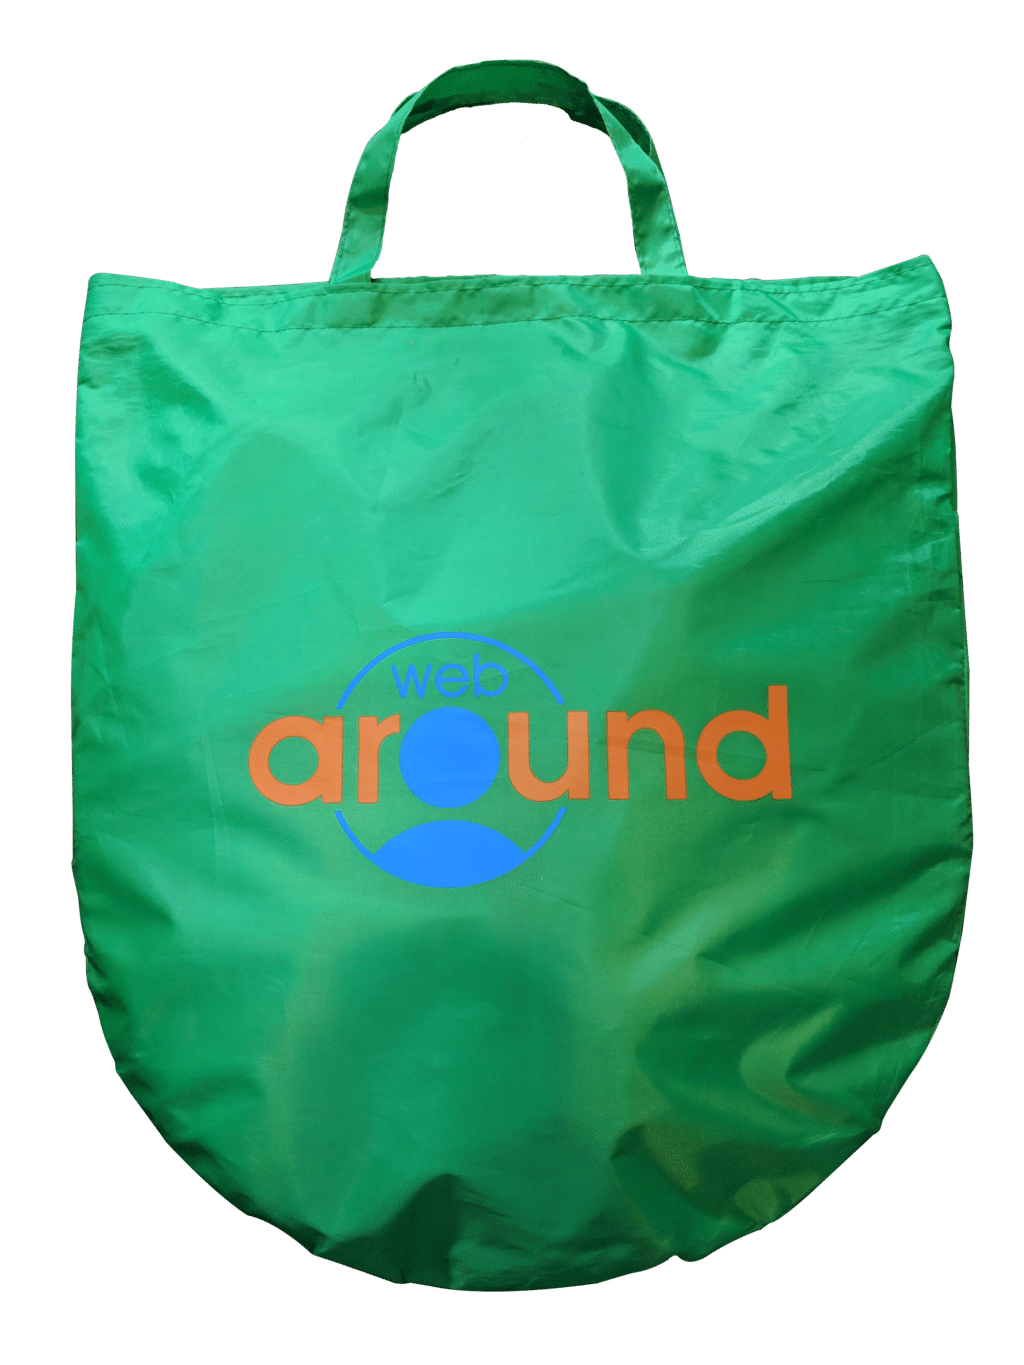 The Webaround Portable Bag